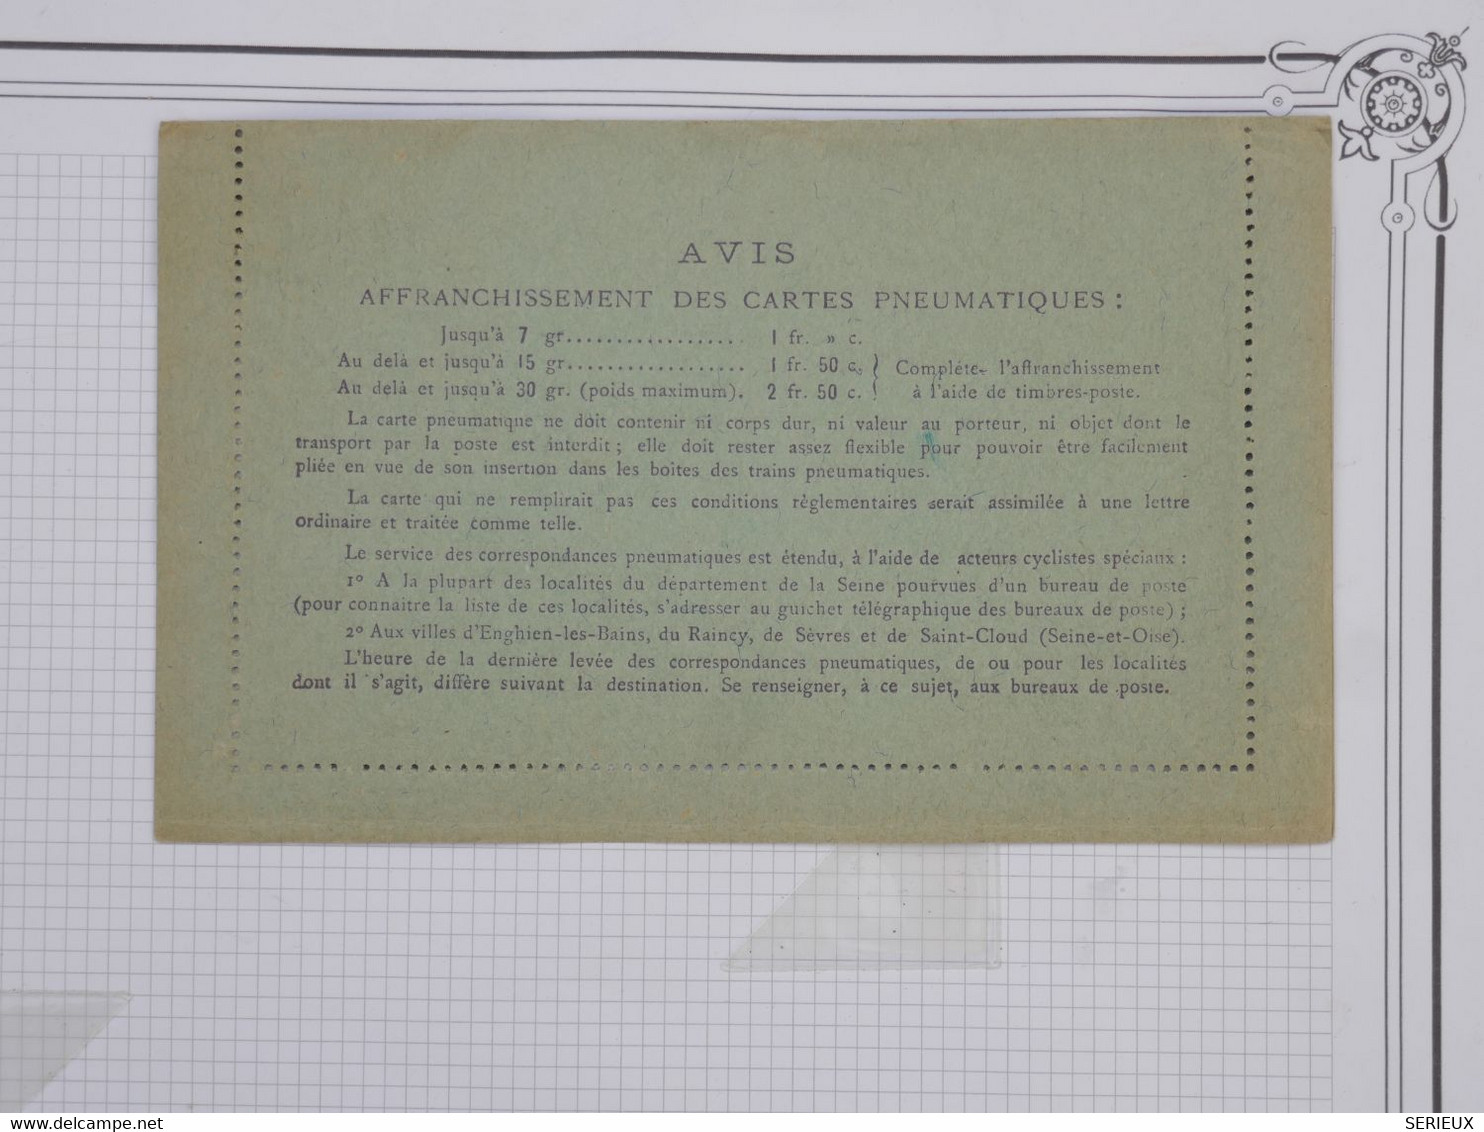 BF15 FRANCE  BELLE CARTE PNEUMATIQUE  TELEGRAPHE 1F 1935  NON VOYAGEE+++ - Pneumatische Post